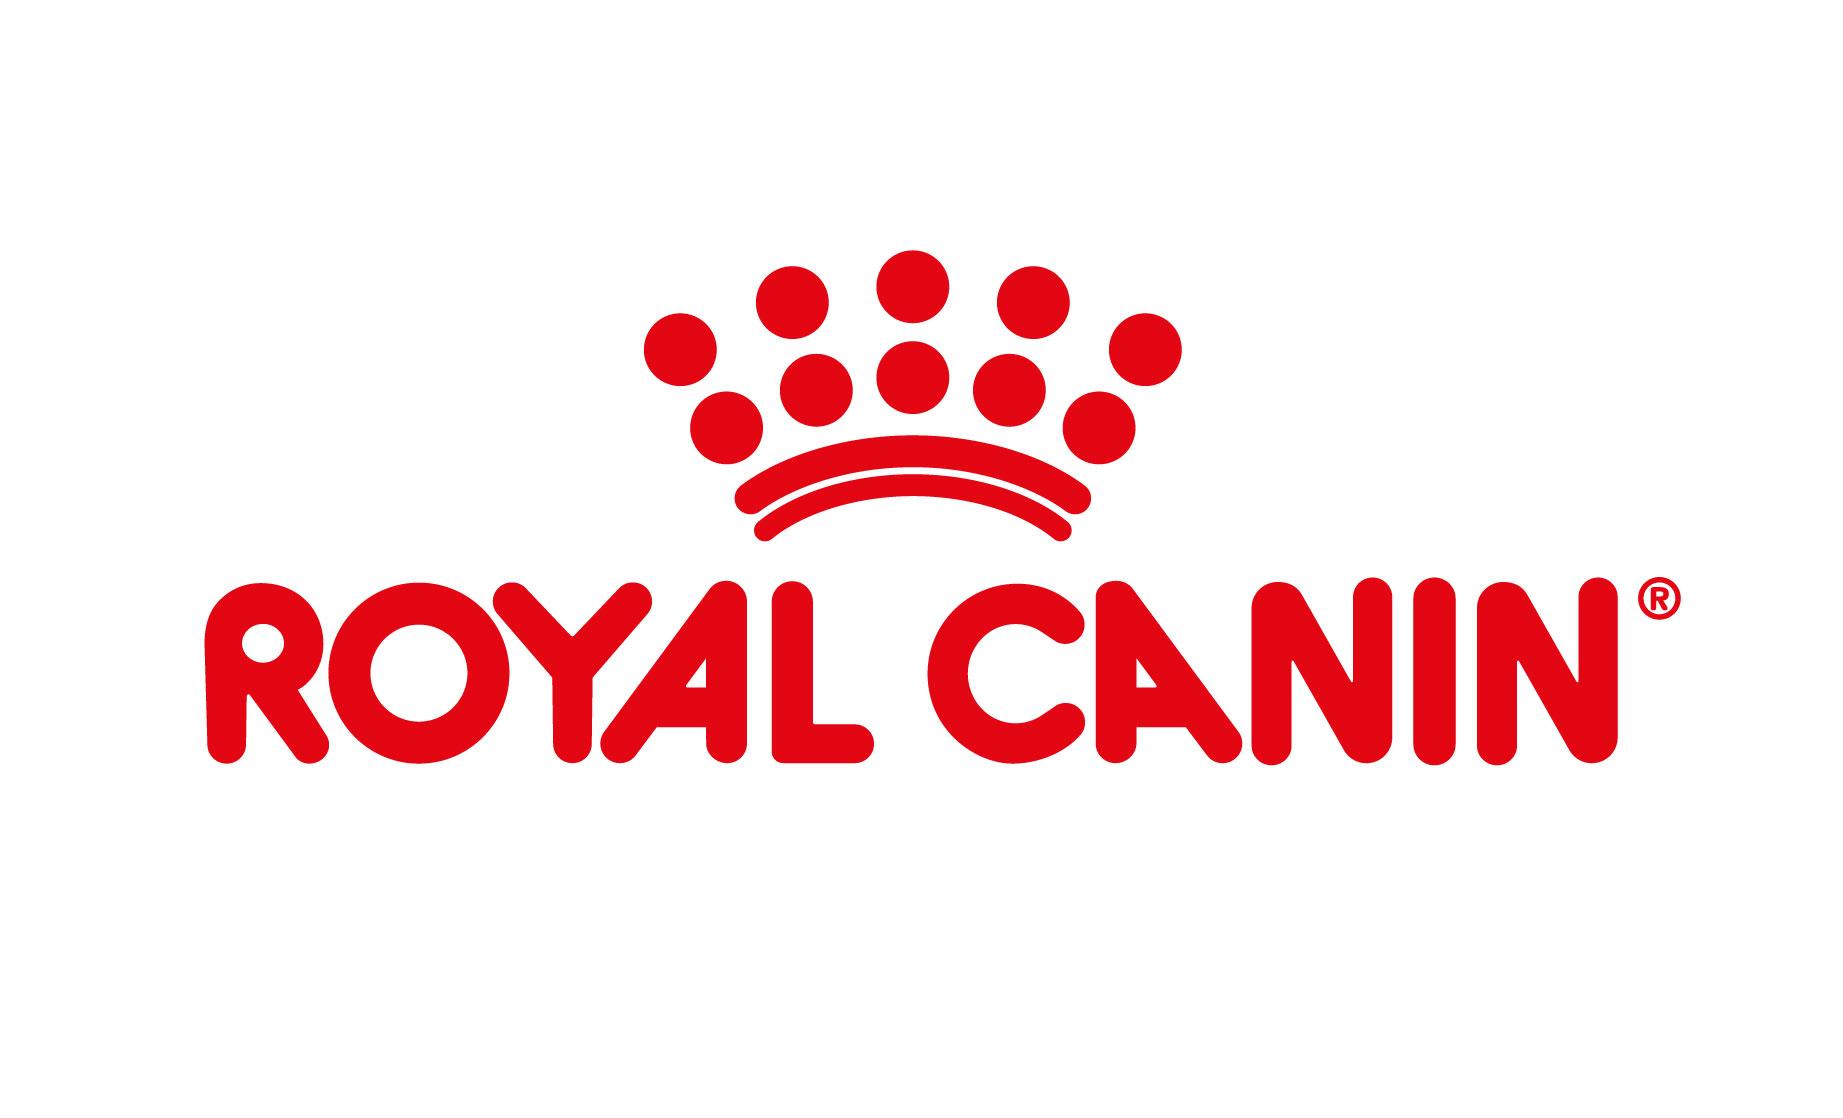 logo royalcanin 2016